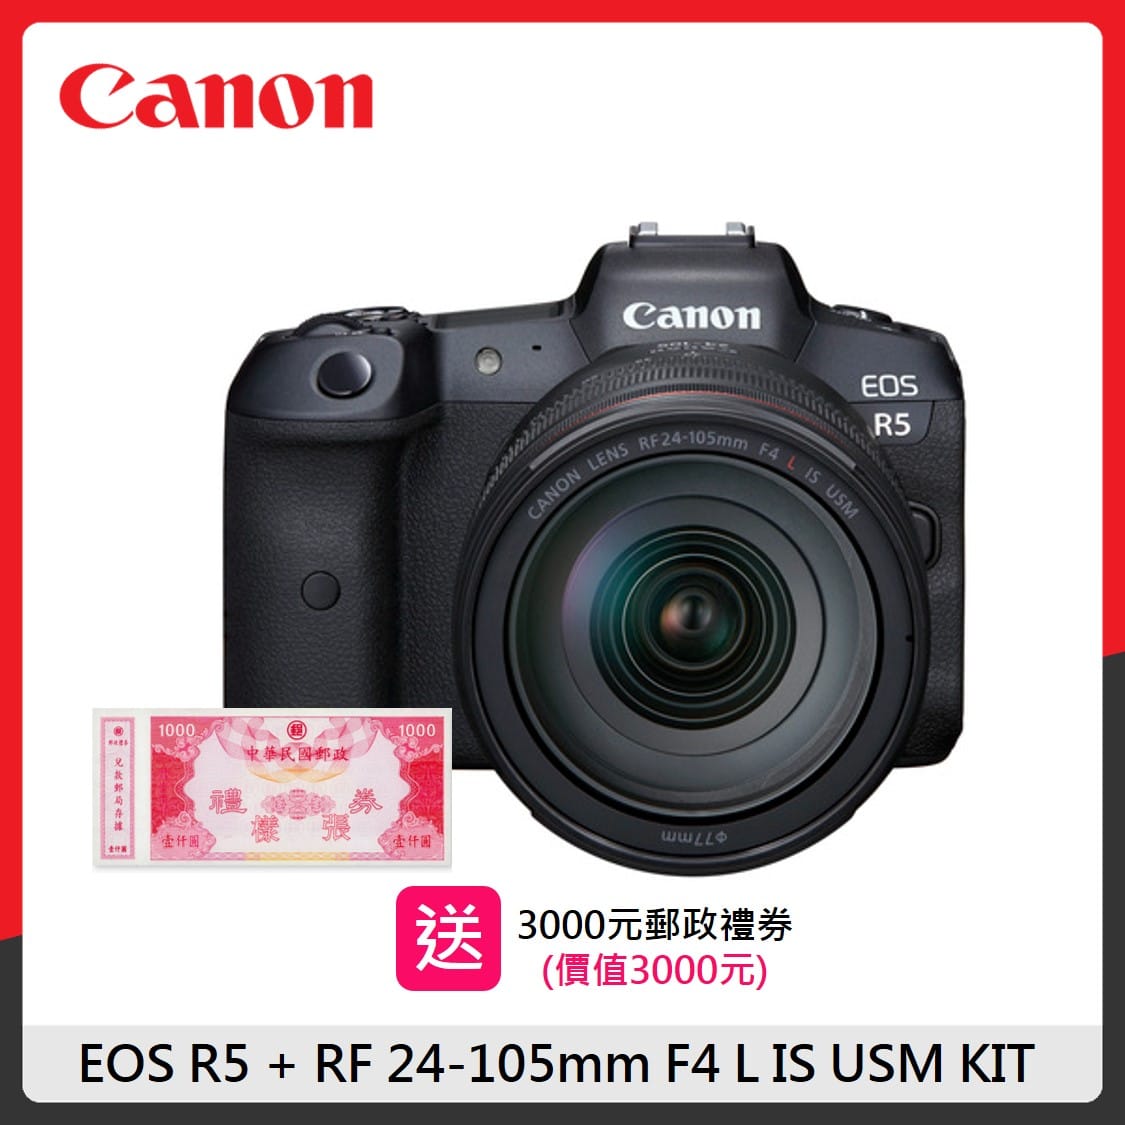 【登錄送郵政禮券】Canon EOS R5 + RF 24-105mm F4 L IS USM KIT (公司貨)